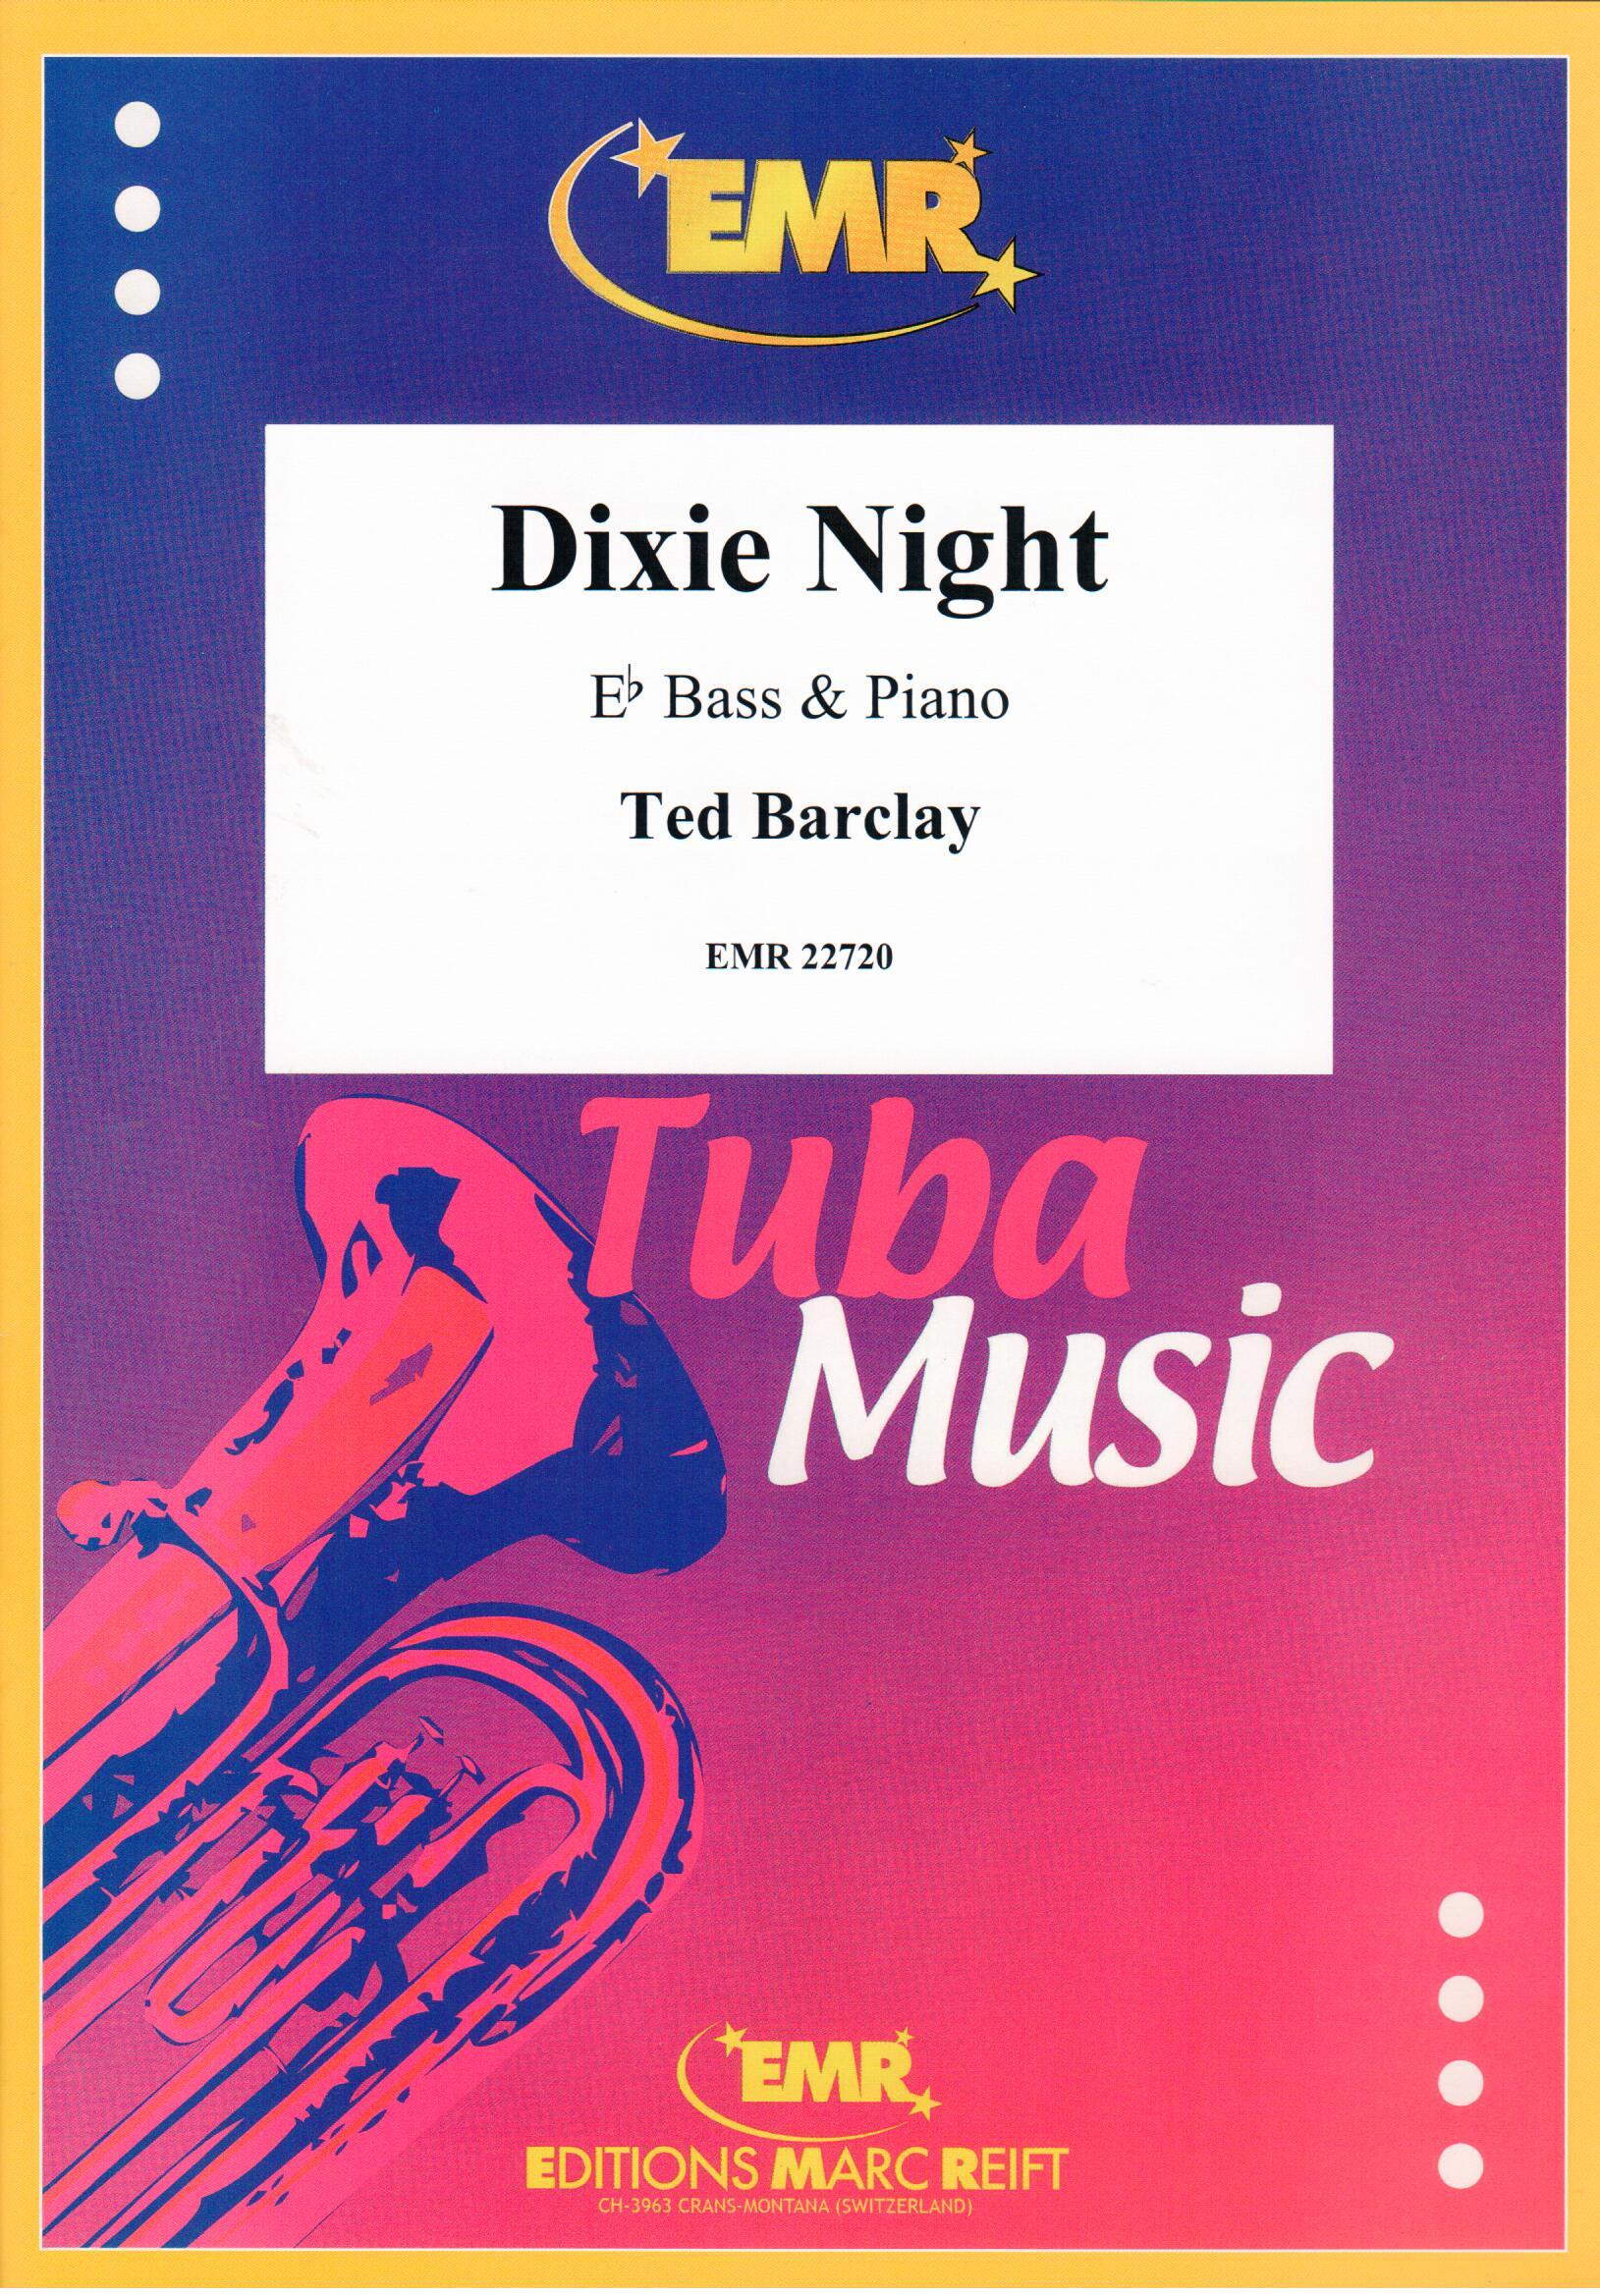 DIXIE NIGHT, SOLOS - E♭. Bass